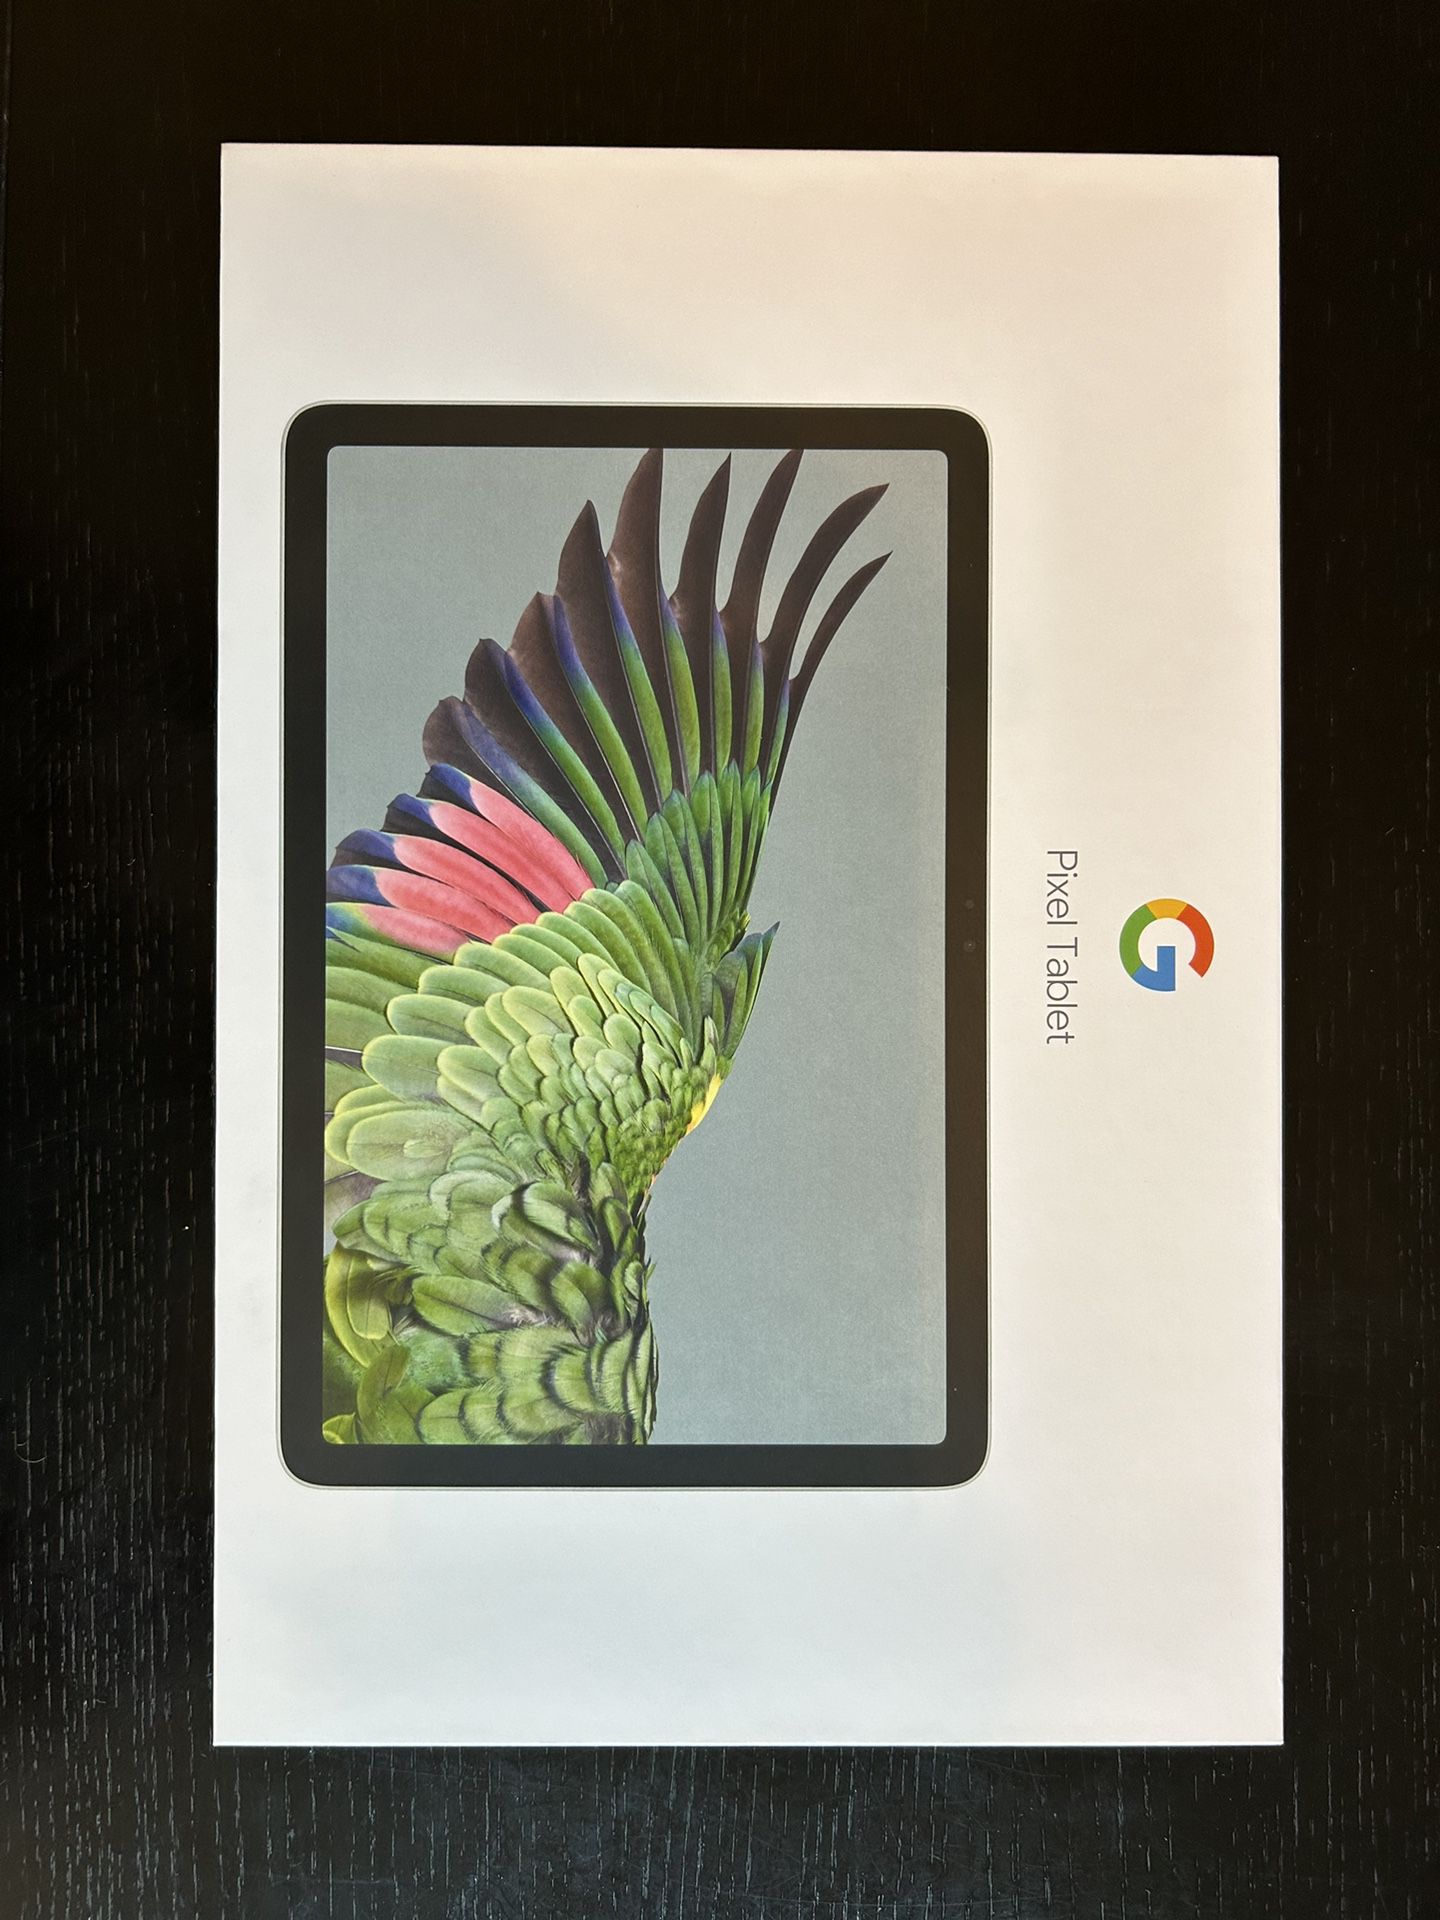 Google Pixel 11” Android Tablet - 128 GB - Hazel